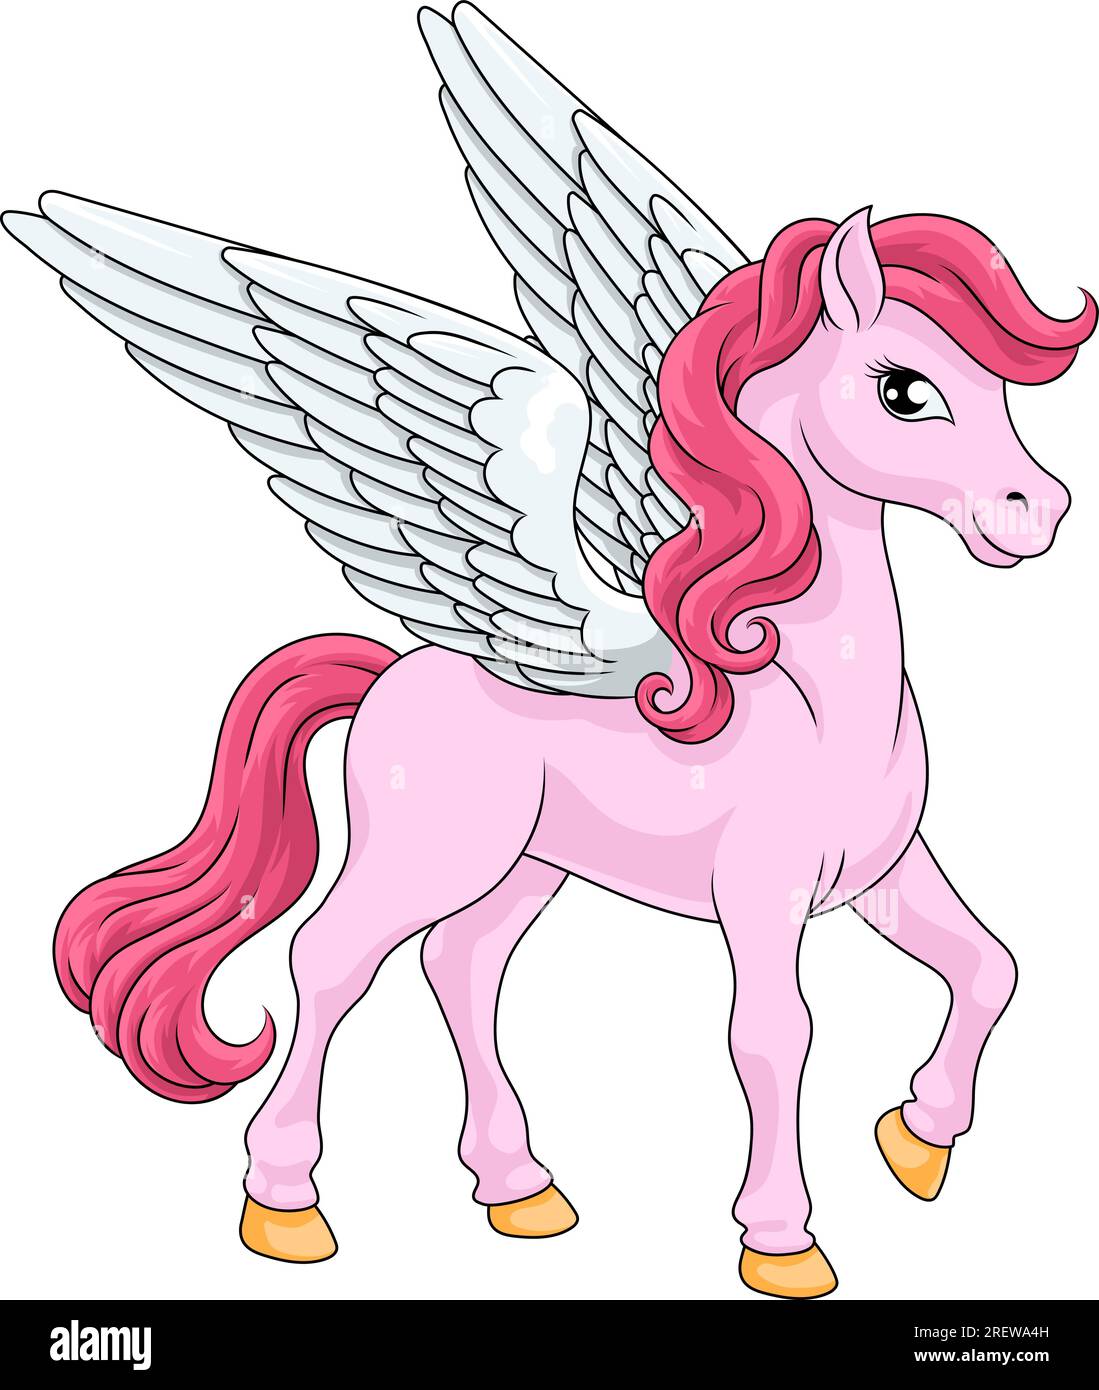 Pegasus Wings Horse Cartoon Animal Illustration Stock Vector